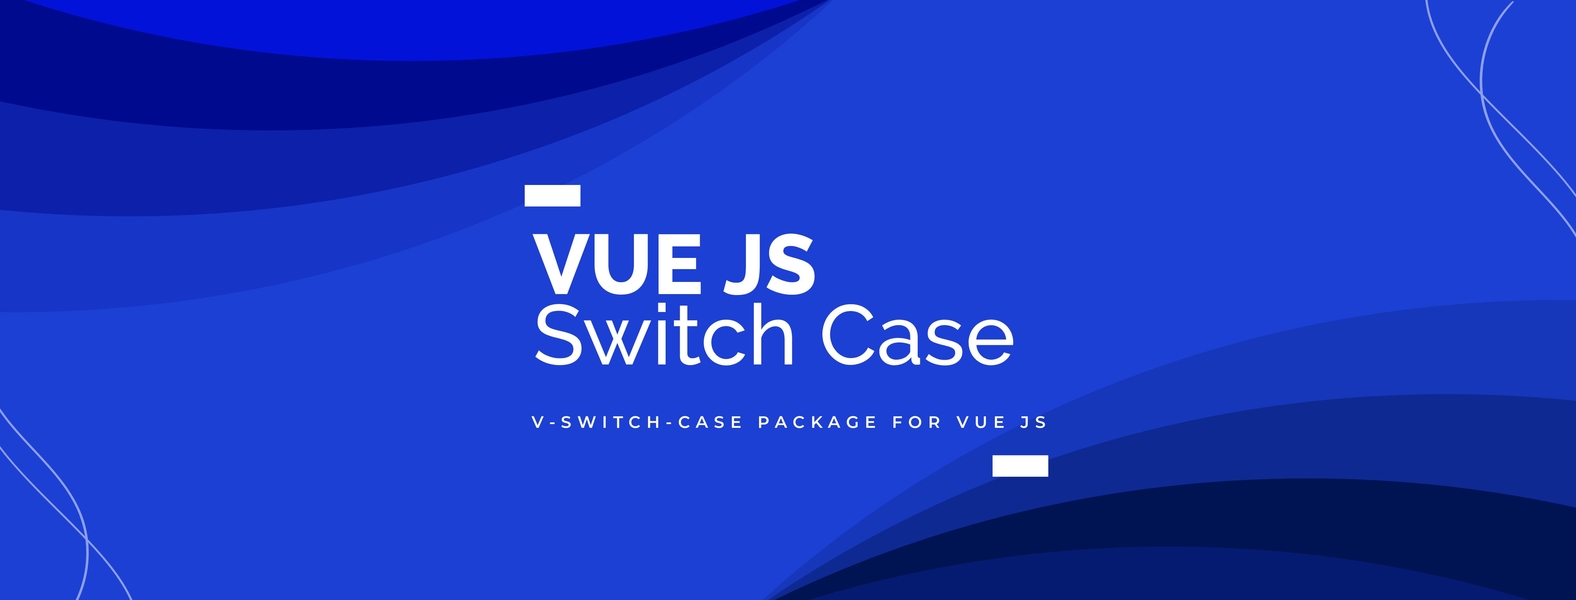 V-Switch-Case - A V-Switch Component for Vue Js 